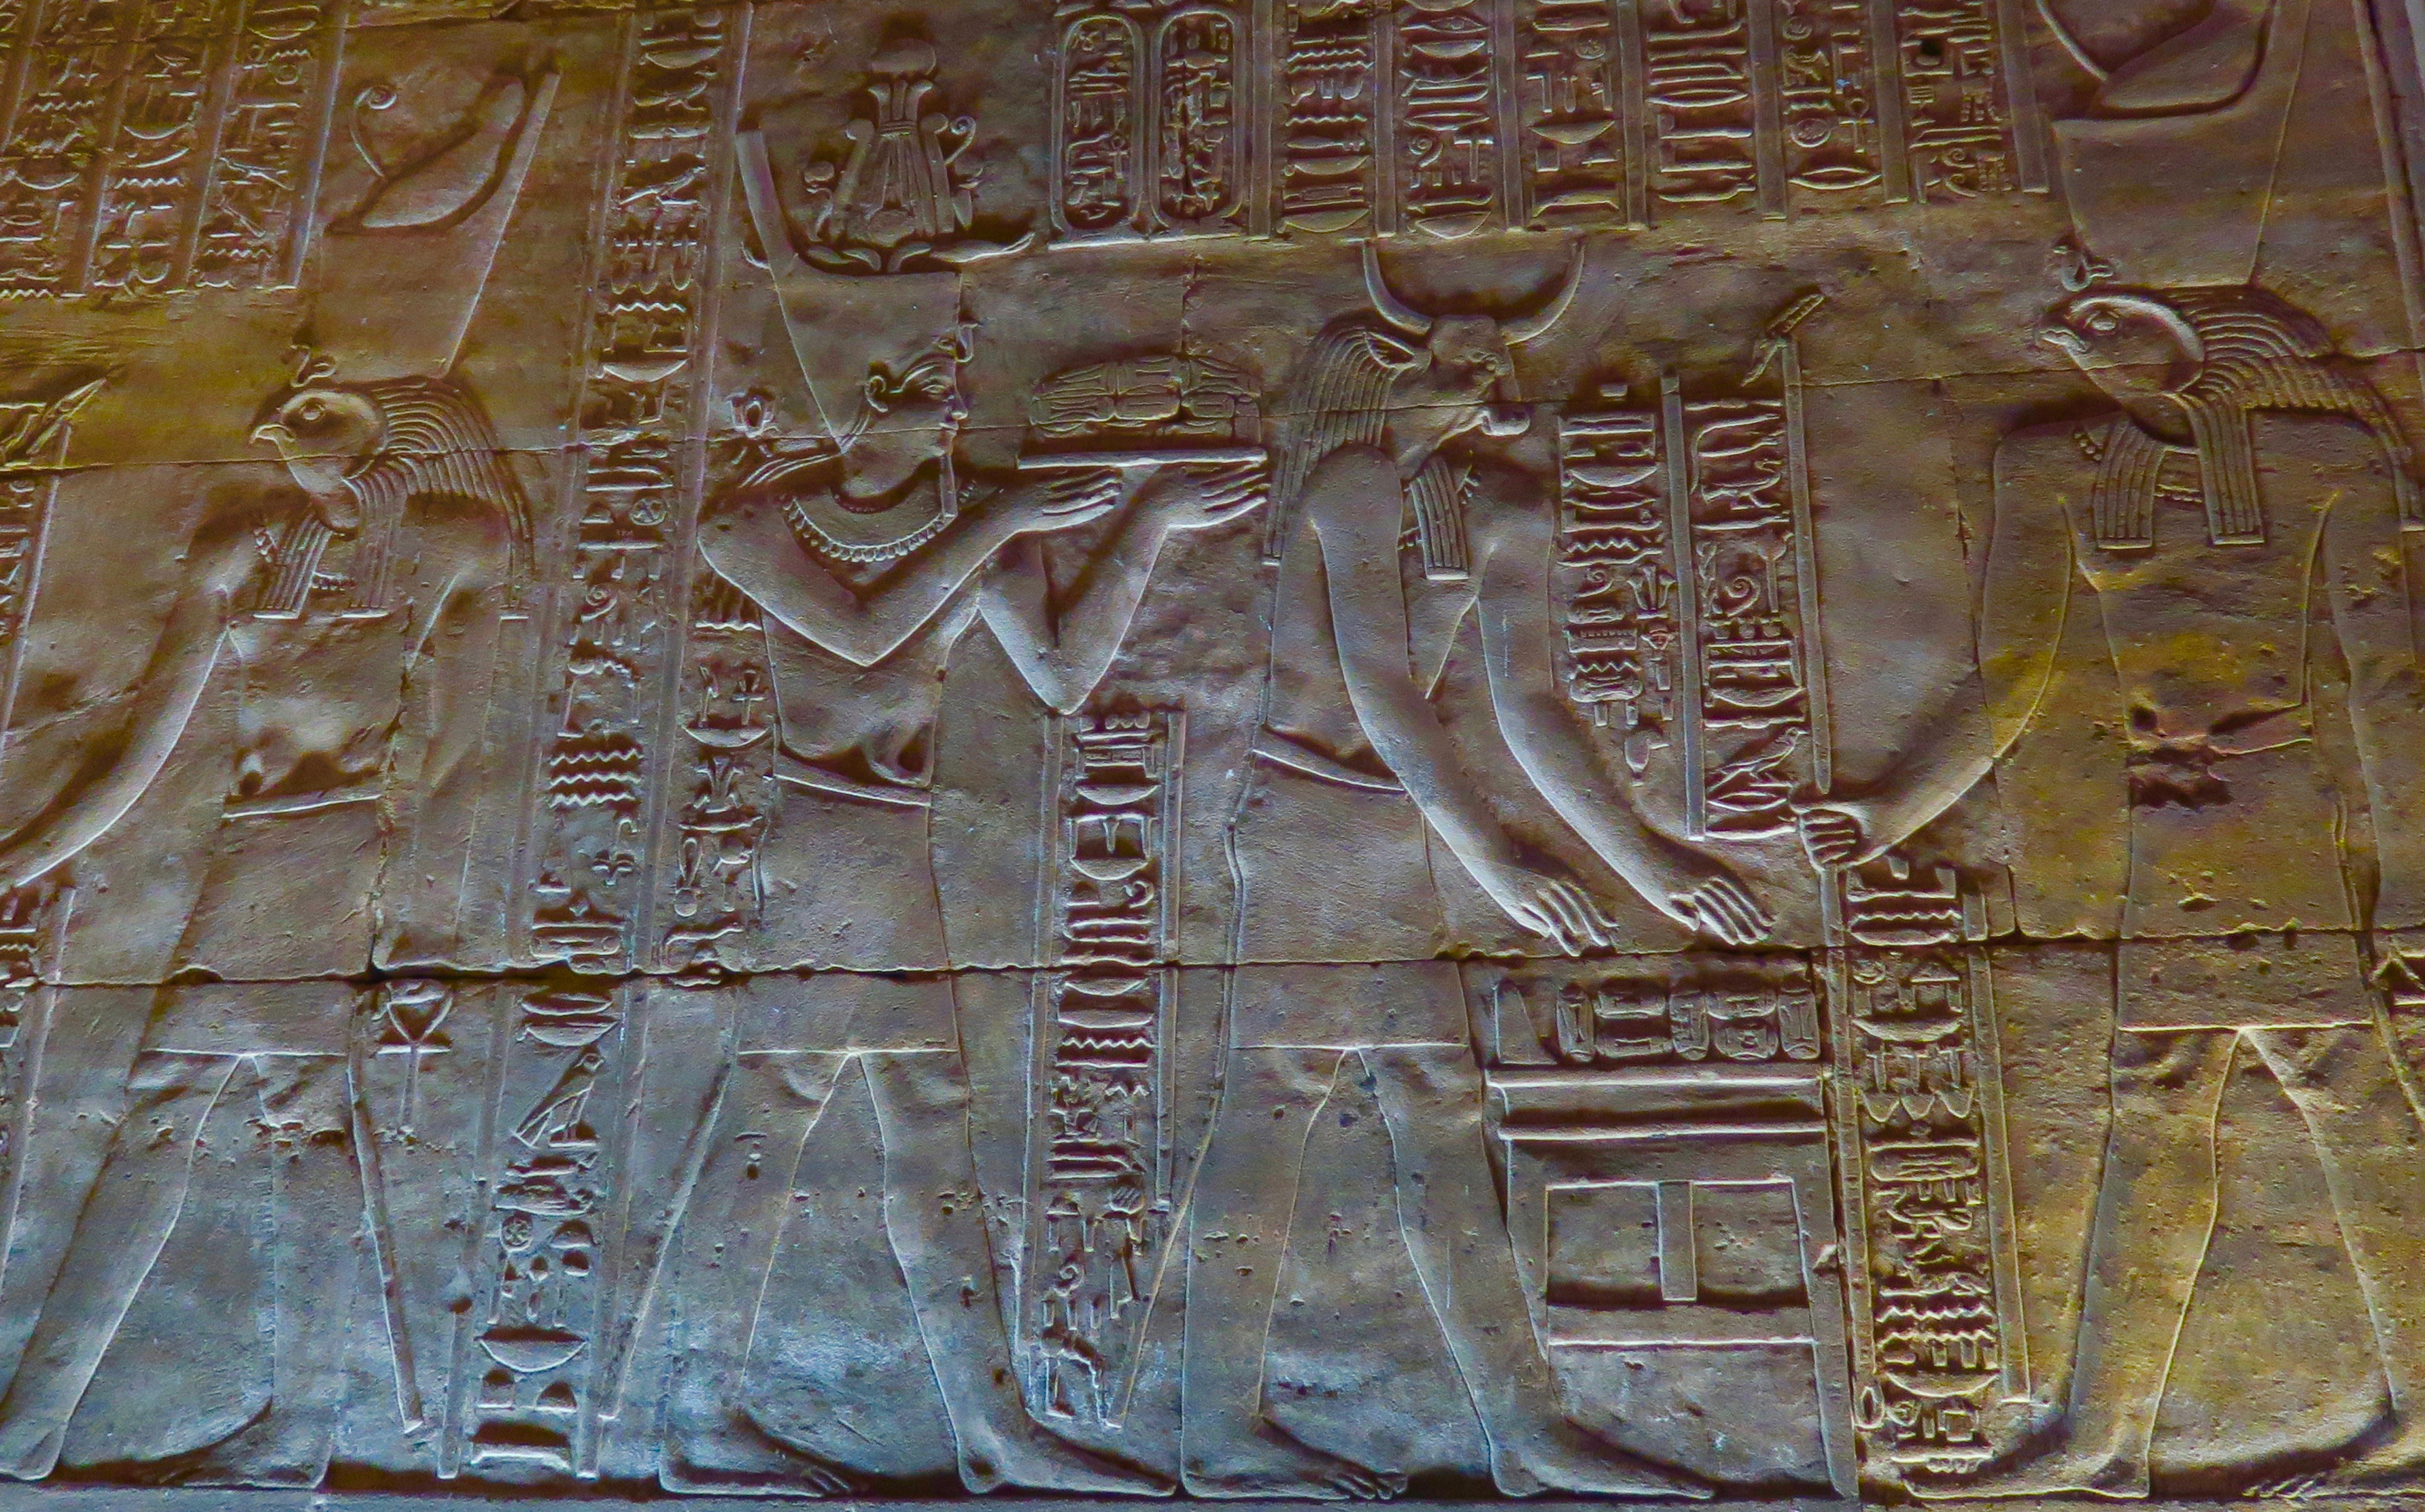 Offerings to Horus, Edfu